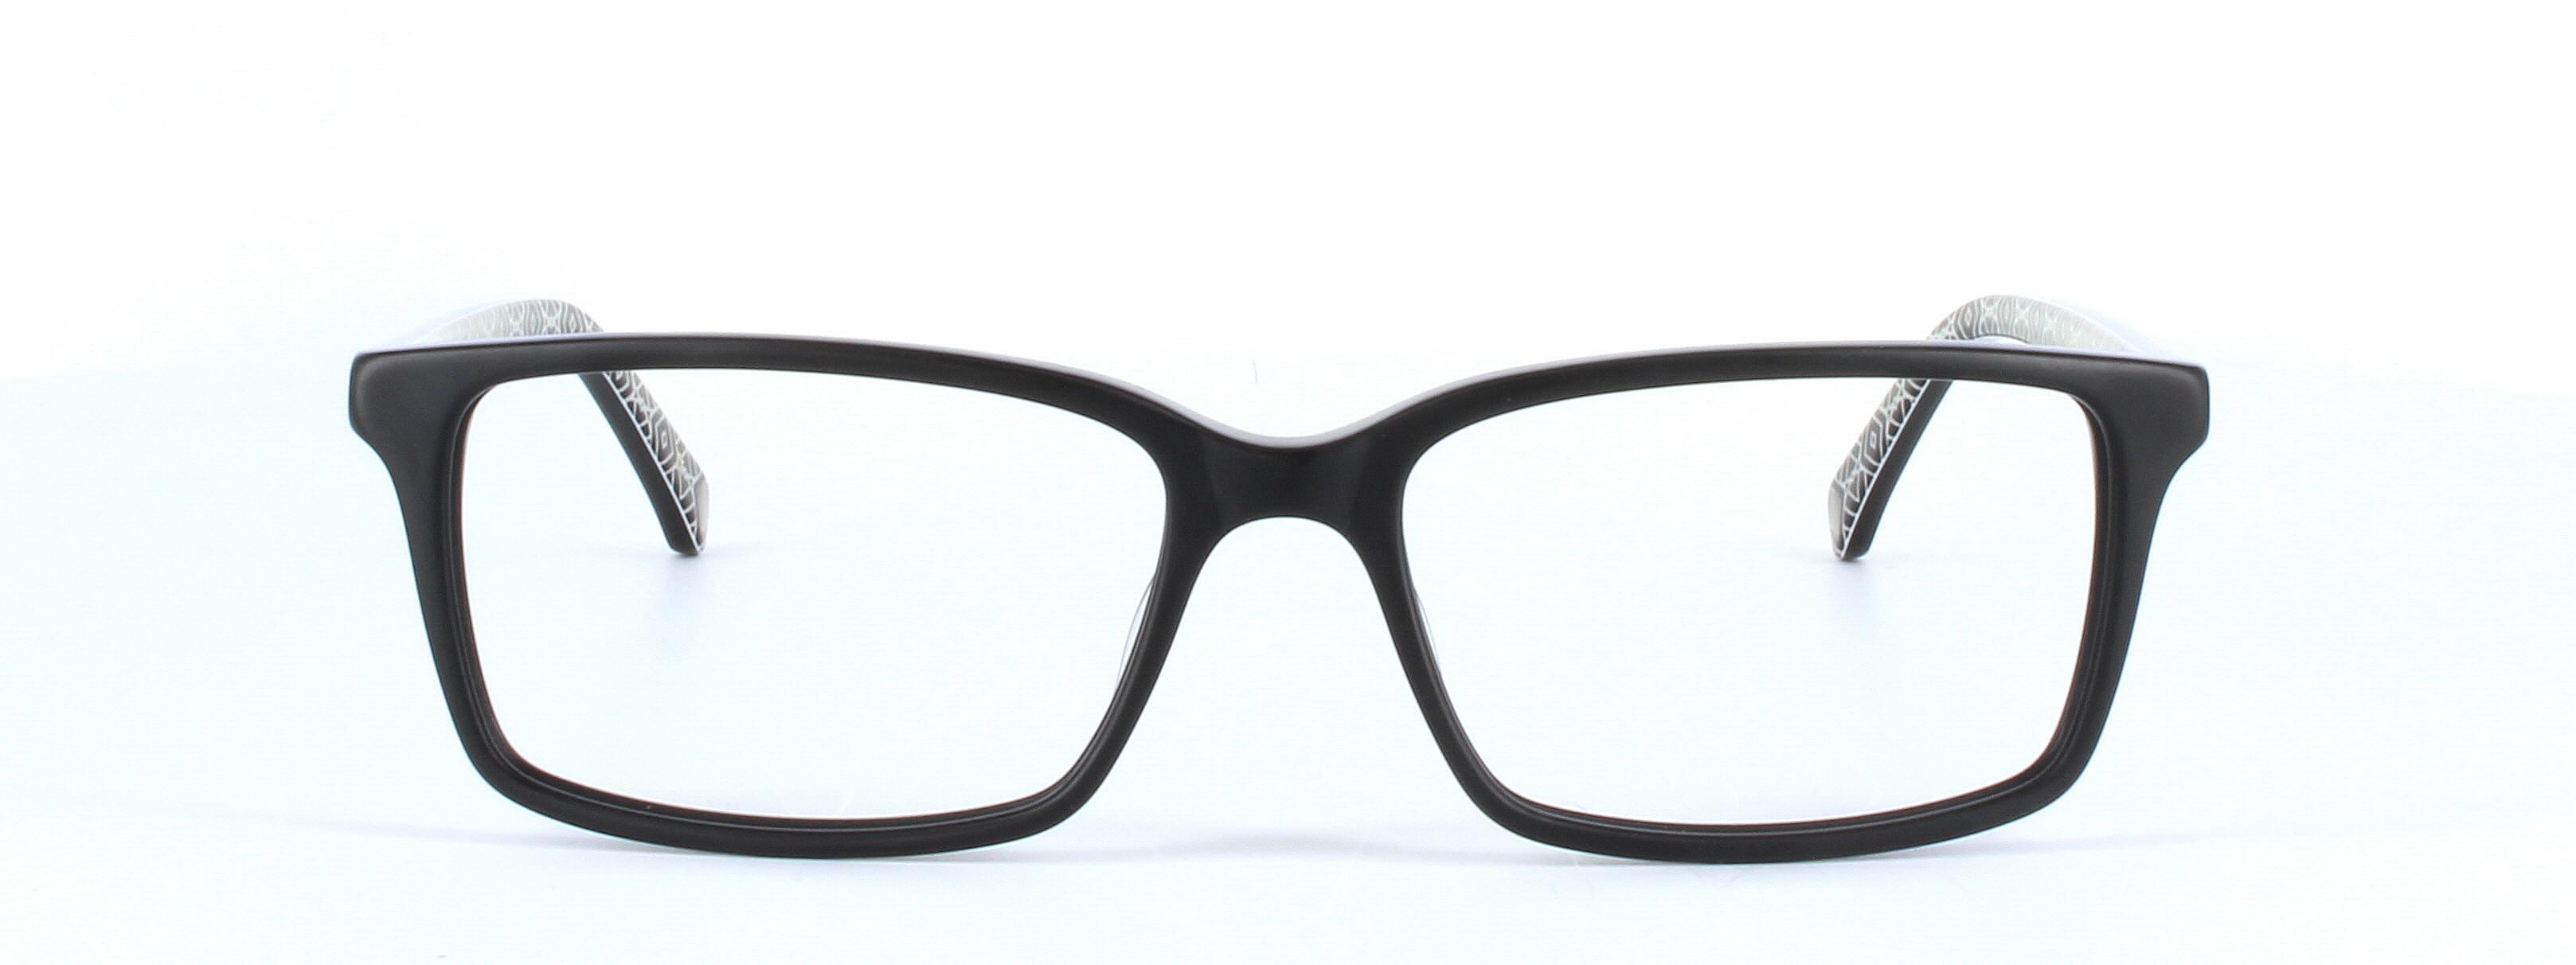 Ted Baker Nolan in black - unisex acetate designer glasses by Police - image view 5